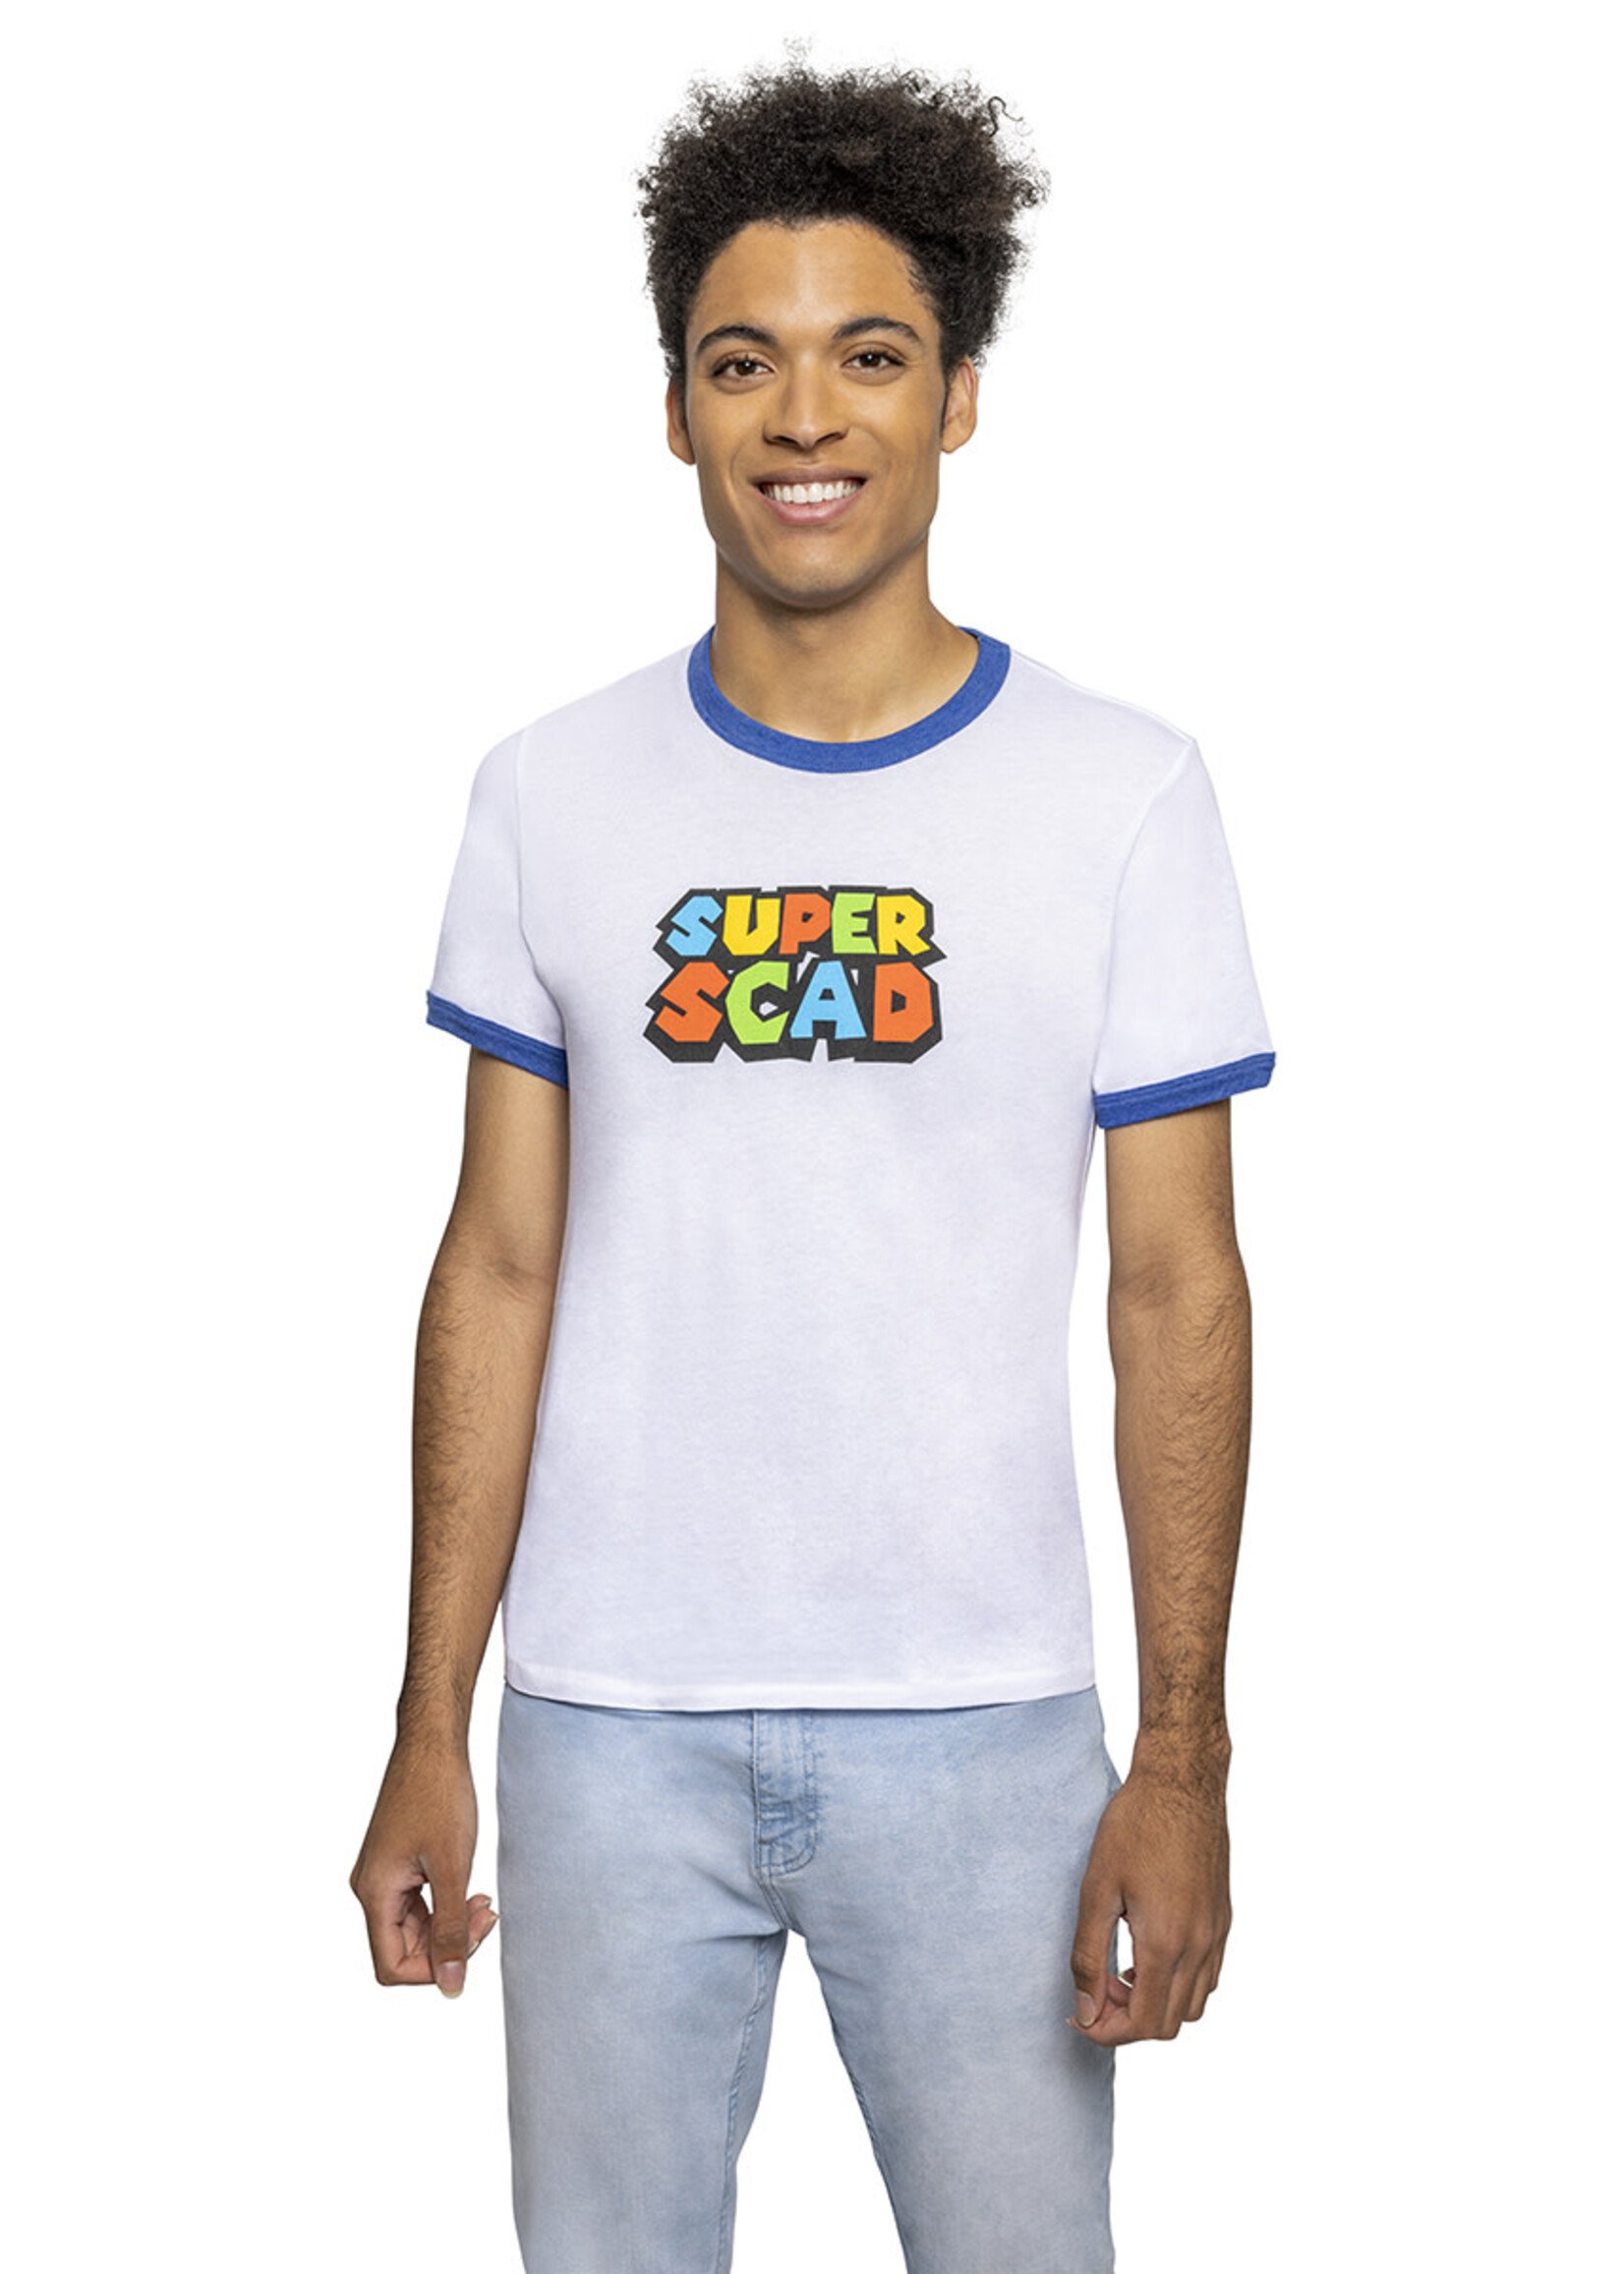 SCAD SCAD Mario Ringer T-shirt